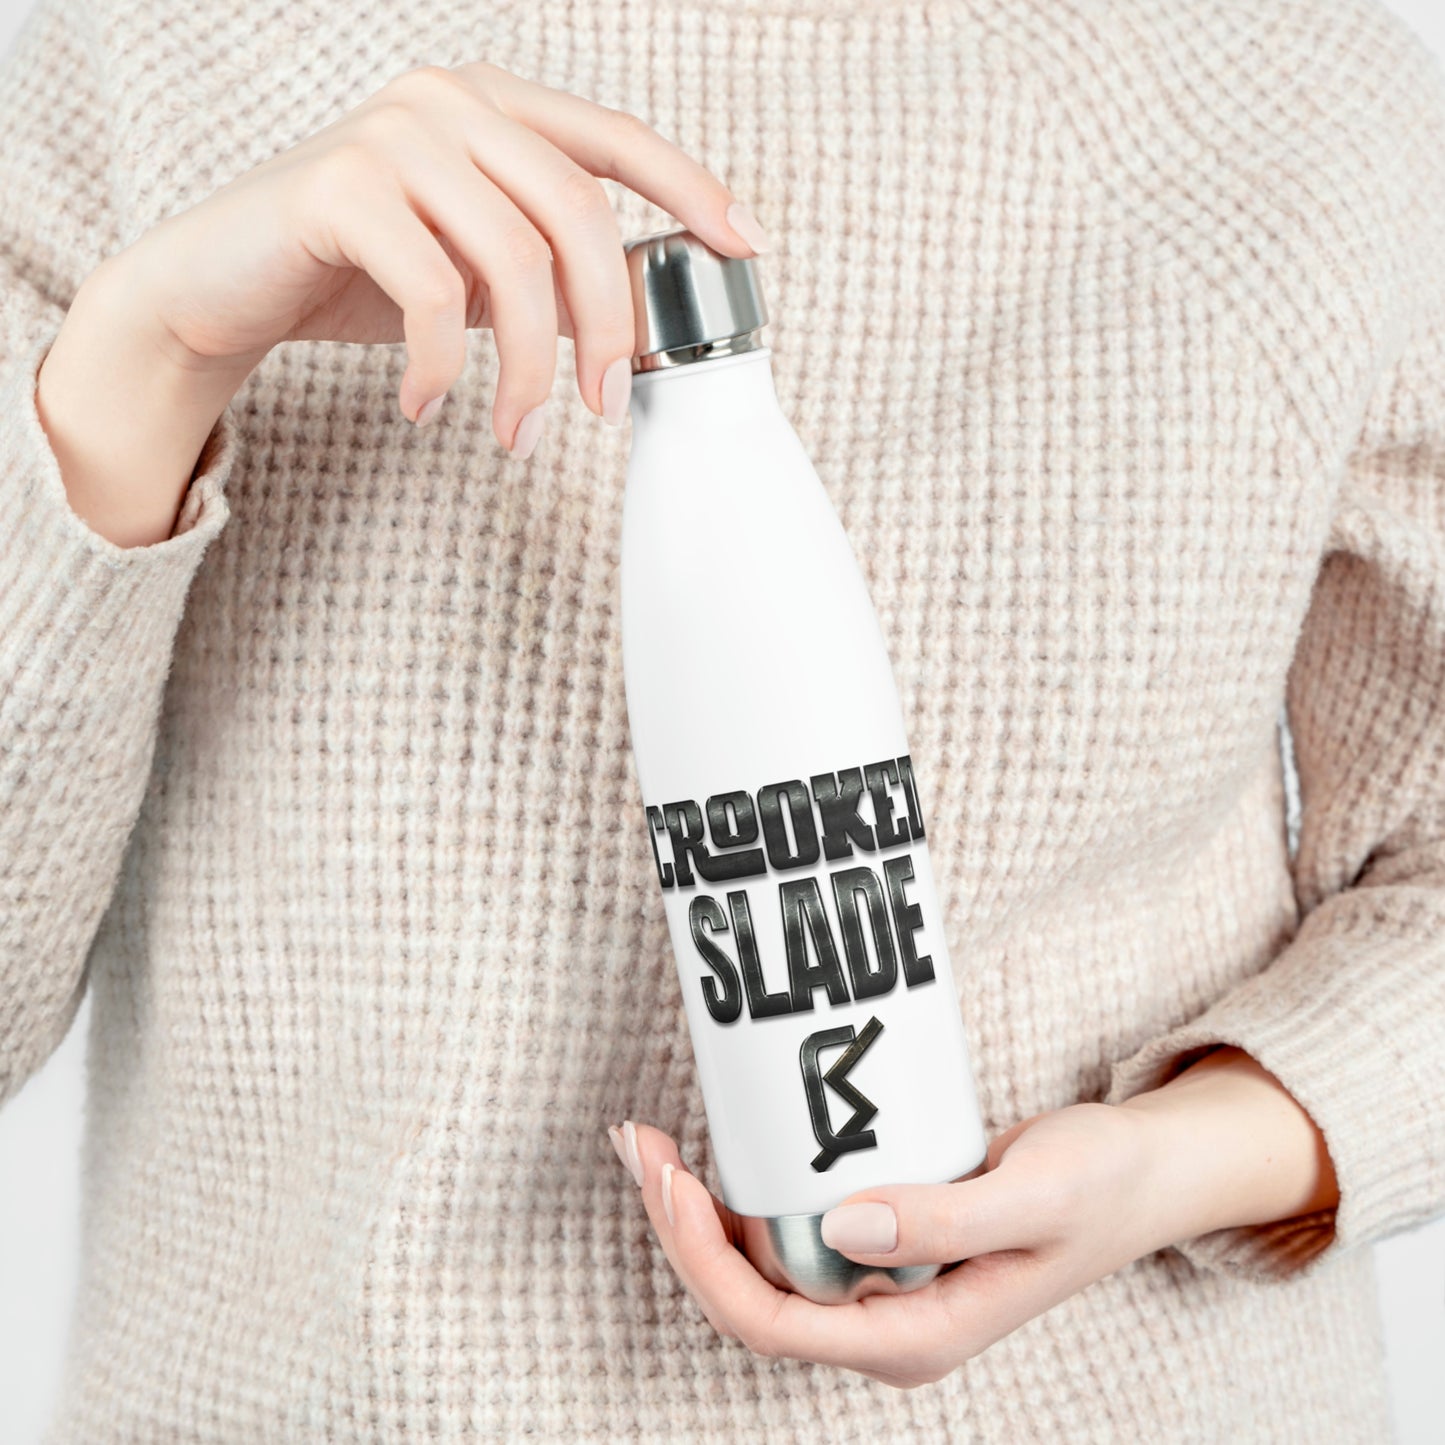 Crooked Slade 20oz Insulated Bottle